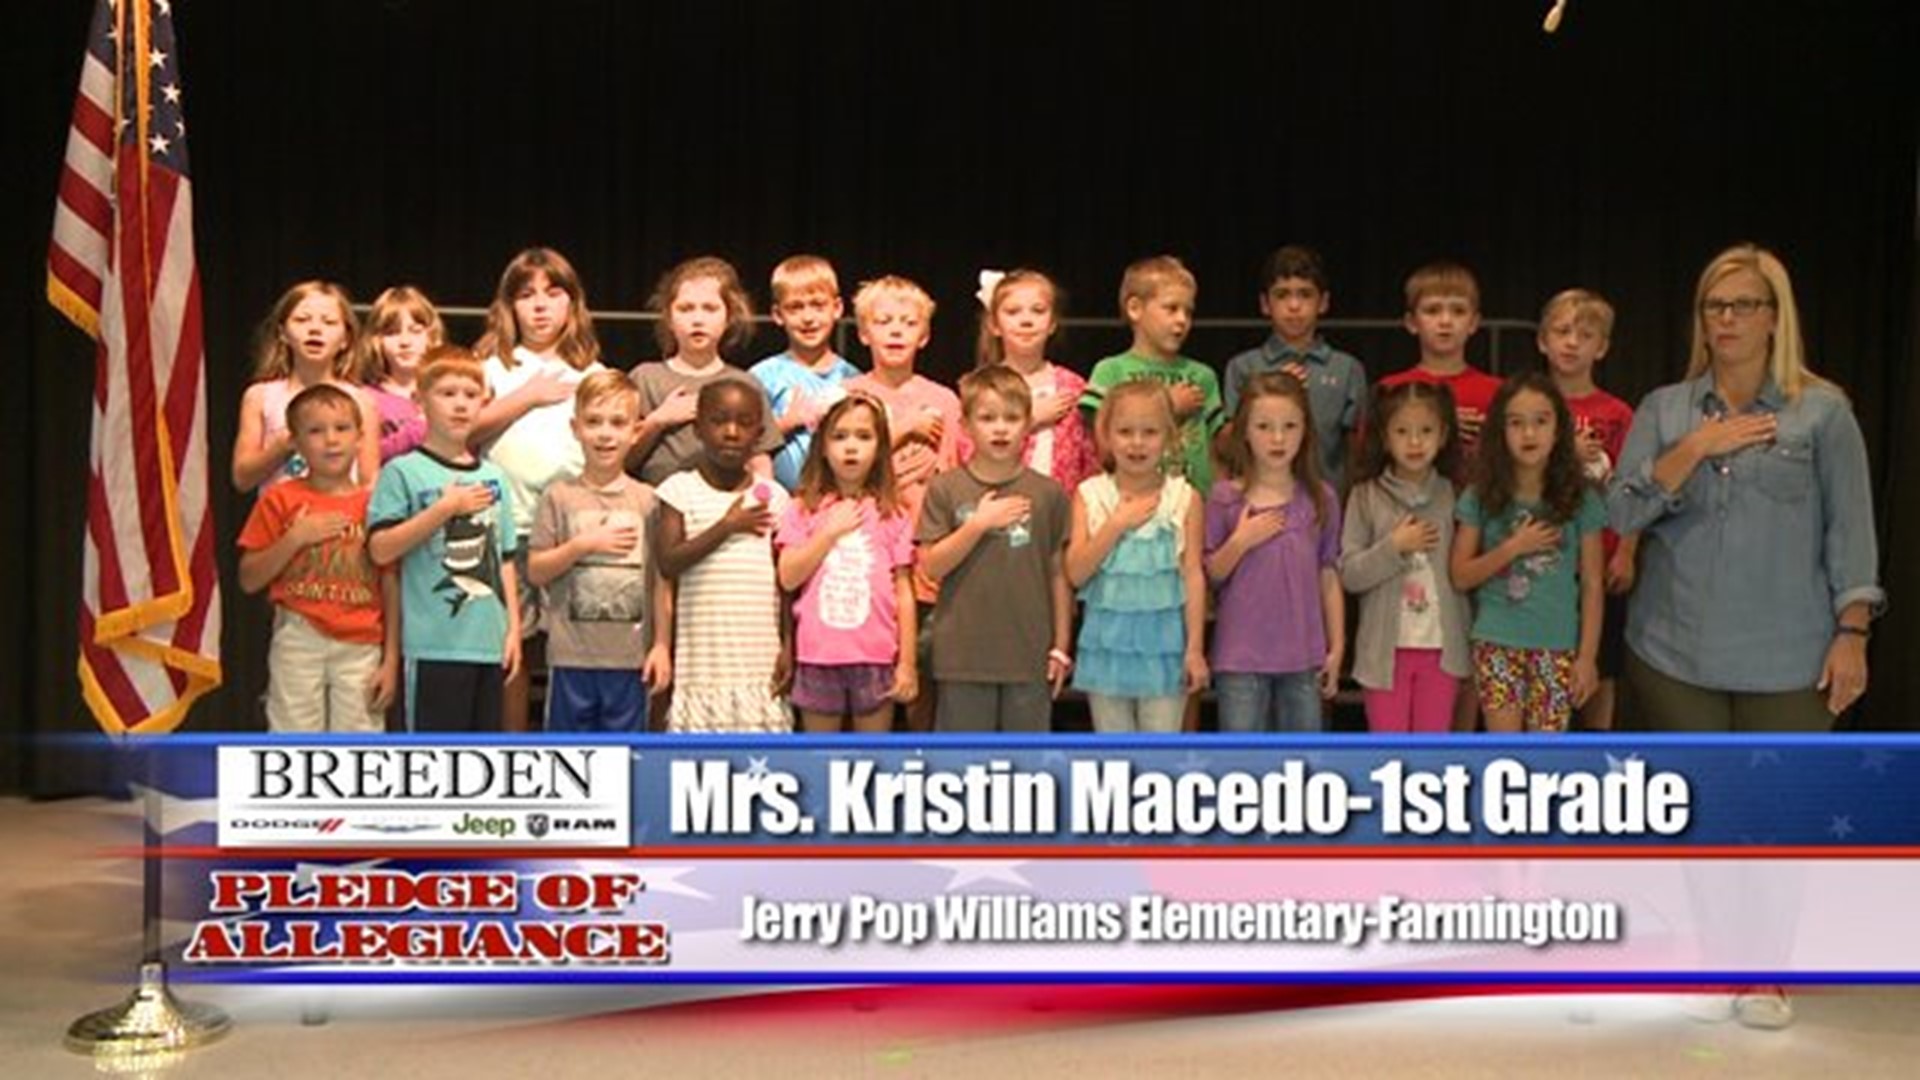 Jerry Pop Williams Elementary, Farmington - Mrs. Kristin Macedo - 1st Grade